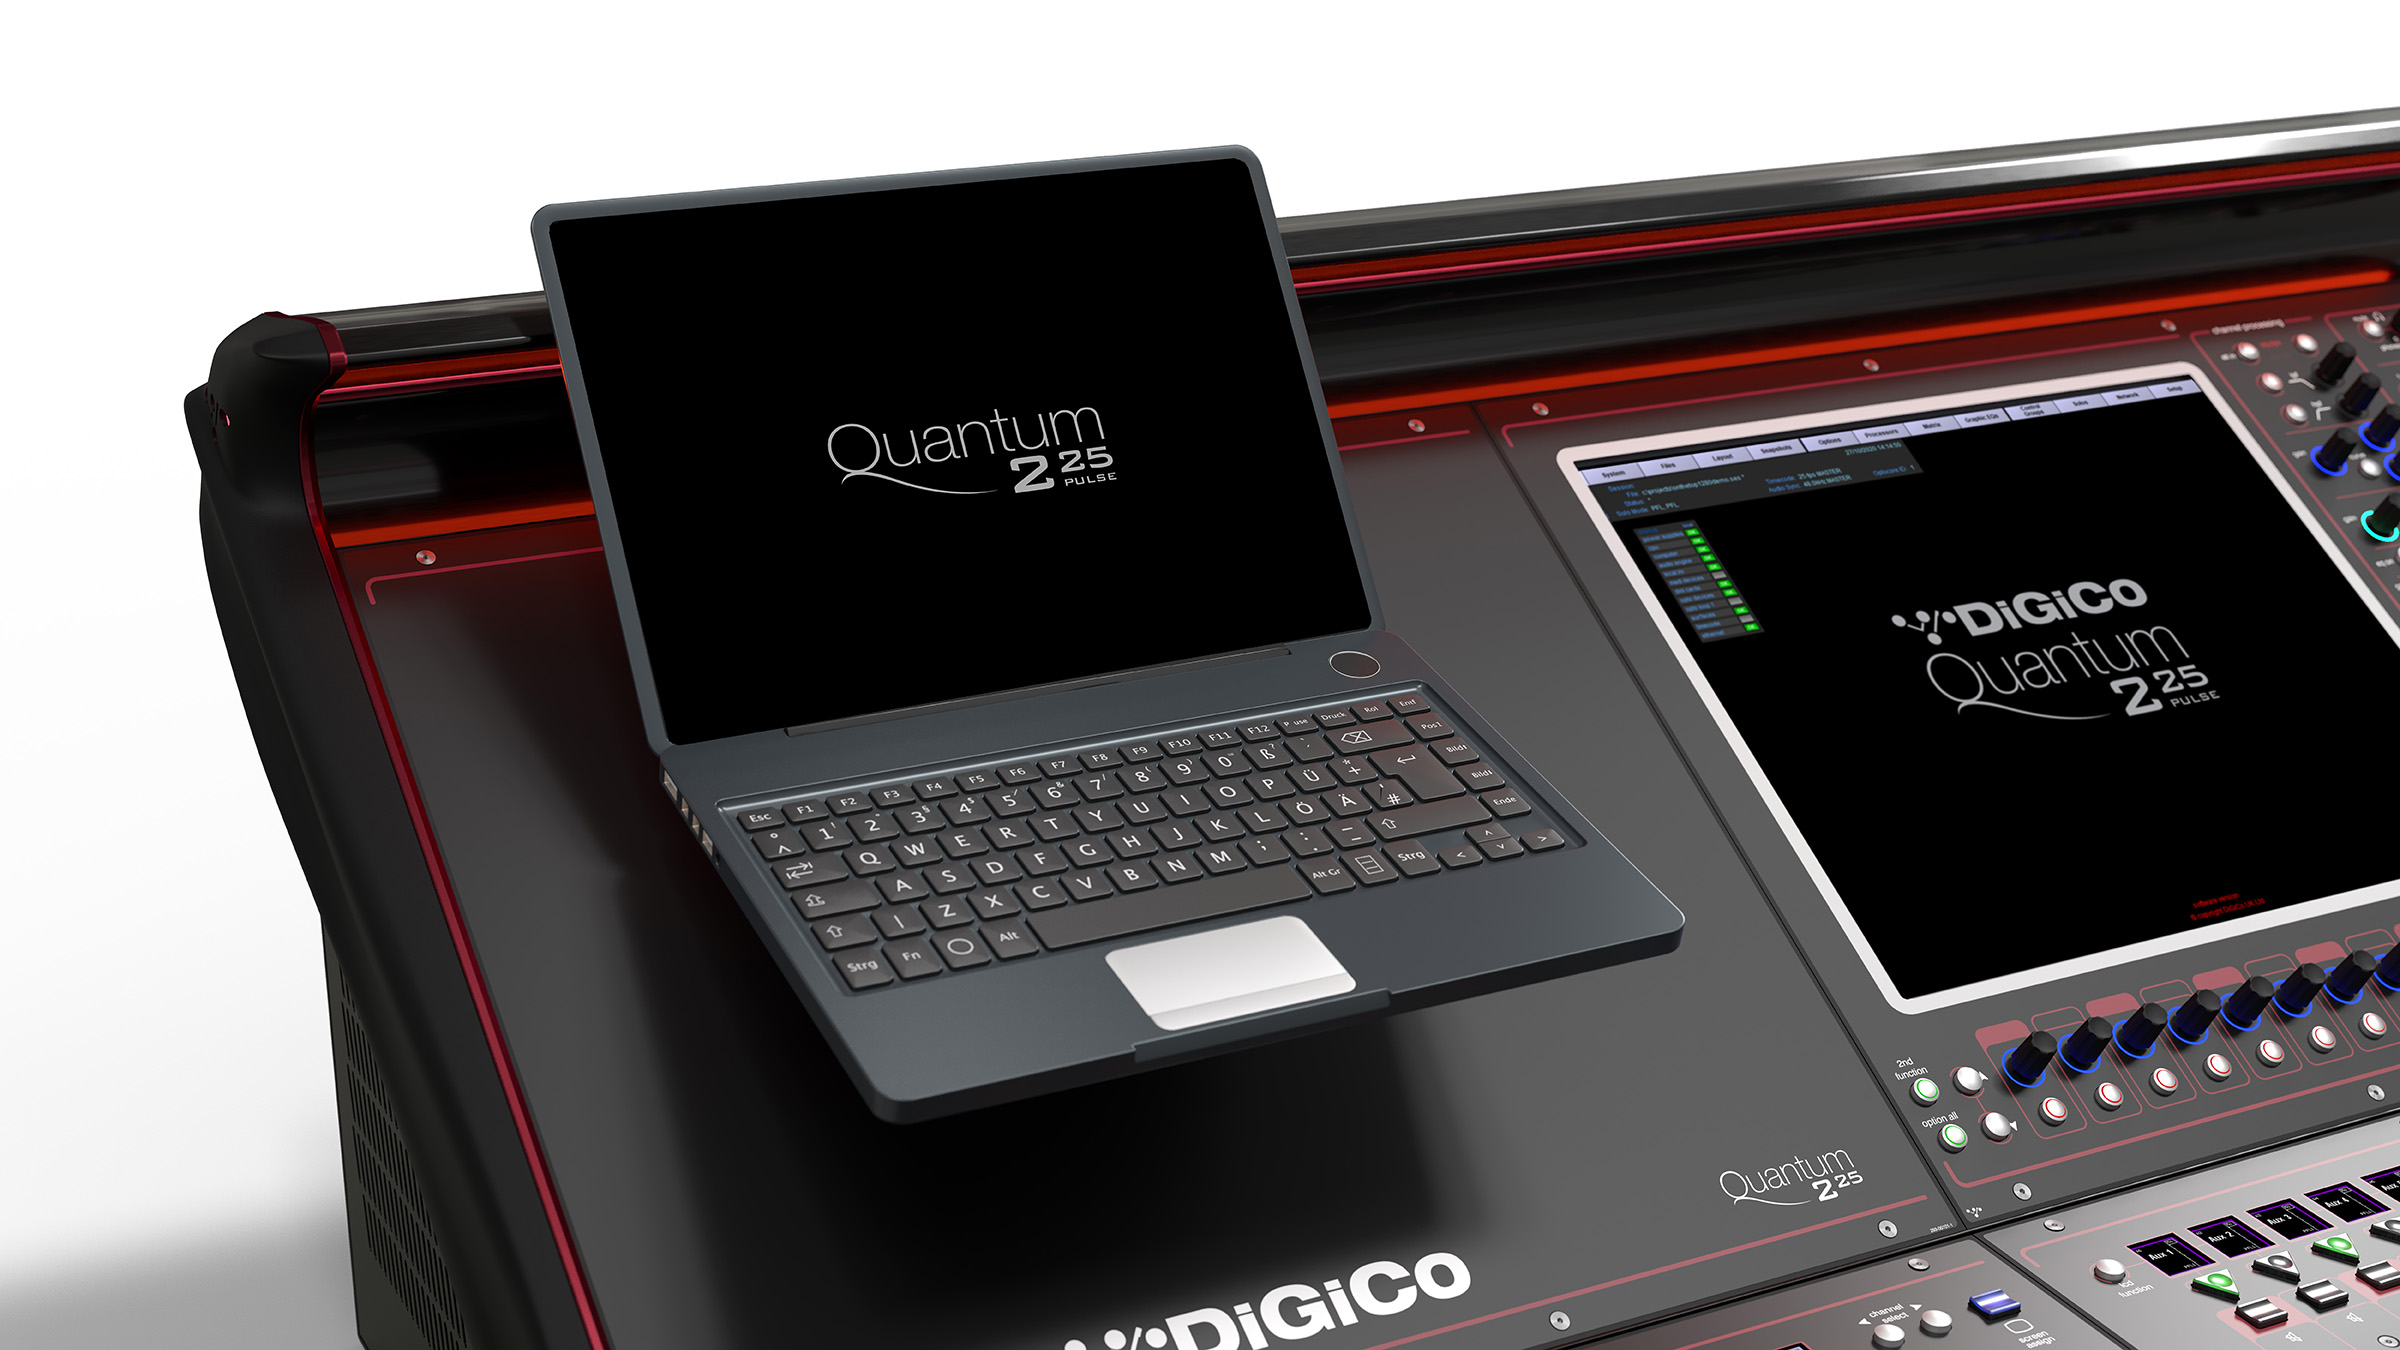 DiGiCo Quantum225 with Pulse software